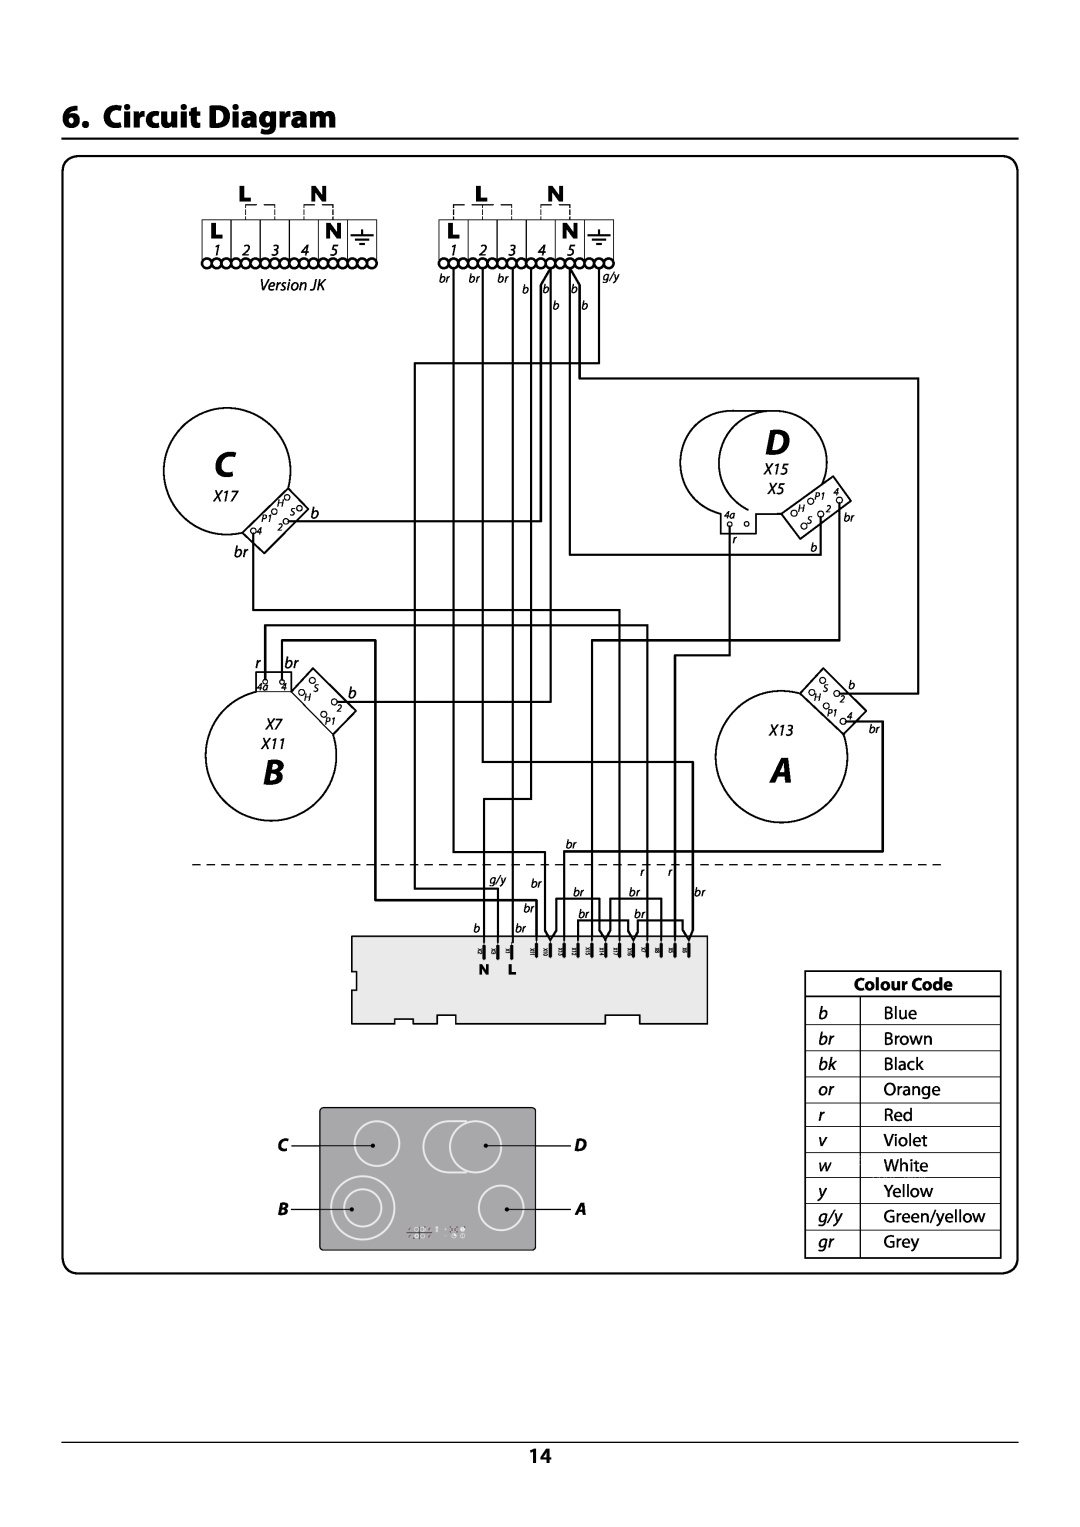 Rangemaster Circuit Diagram, DocNo.092-0002 - Circuit diagram - RC77, ArtNo.080-0012, RC77 circuit diagram, code table 